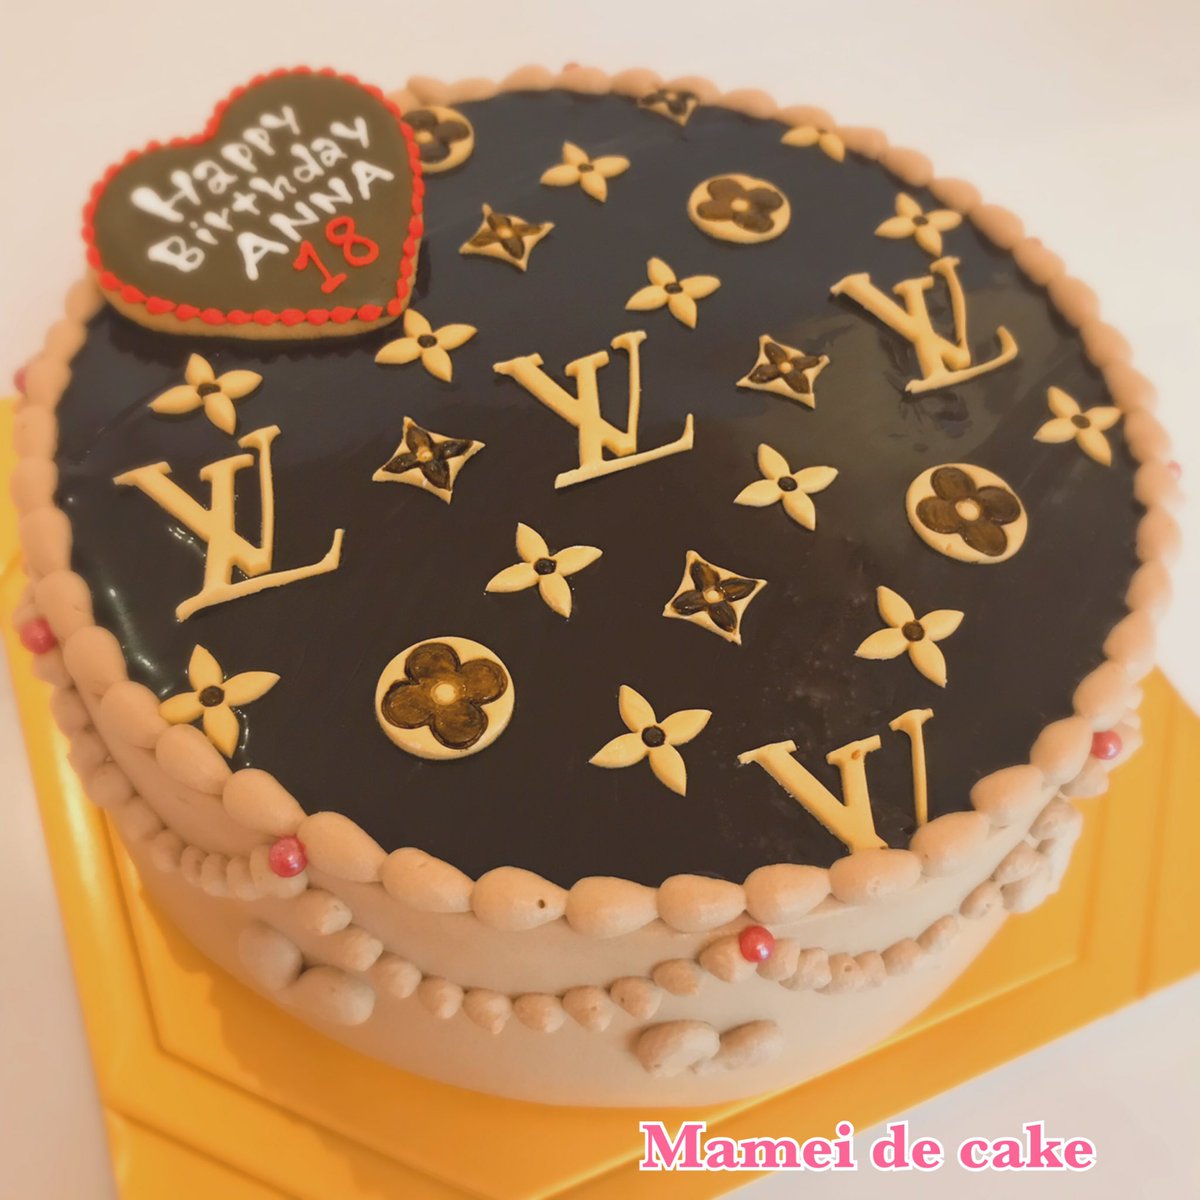 Mamei De Cake マーメイドケーキ No Twitter Gorgeous Cake ケーキ オーダーケーキ オリジナルケーキ ロゴケーキ ルイヴィトン 誕生日ケーキ サプライズ スイーツ カフェ 誕生日 ヴィトン Cake Happybirthday Louisvuitton Logo Monogram Sweets